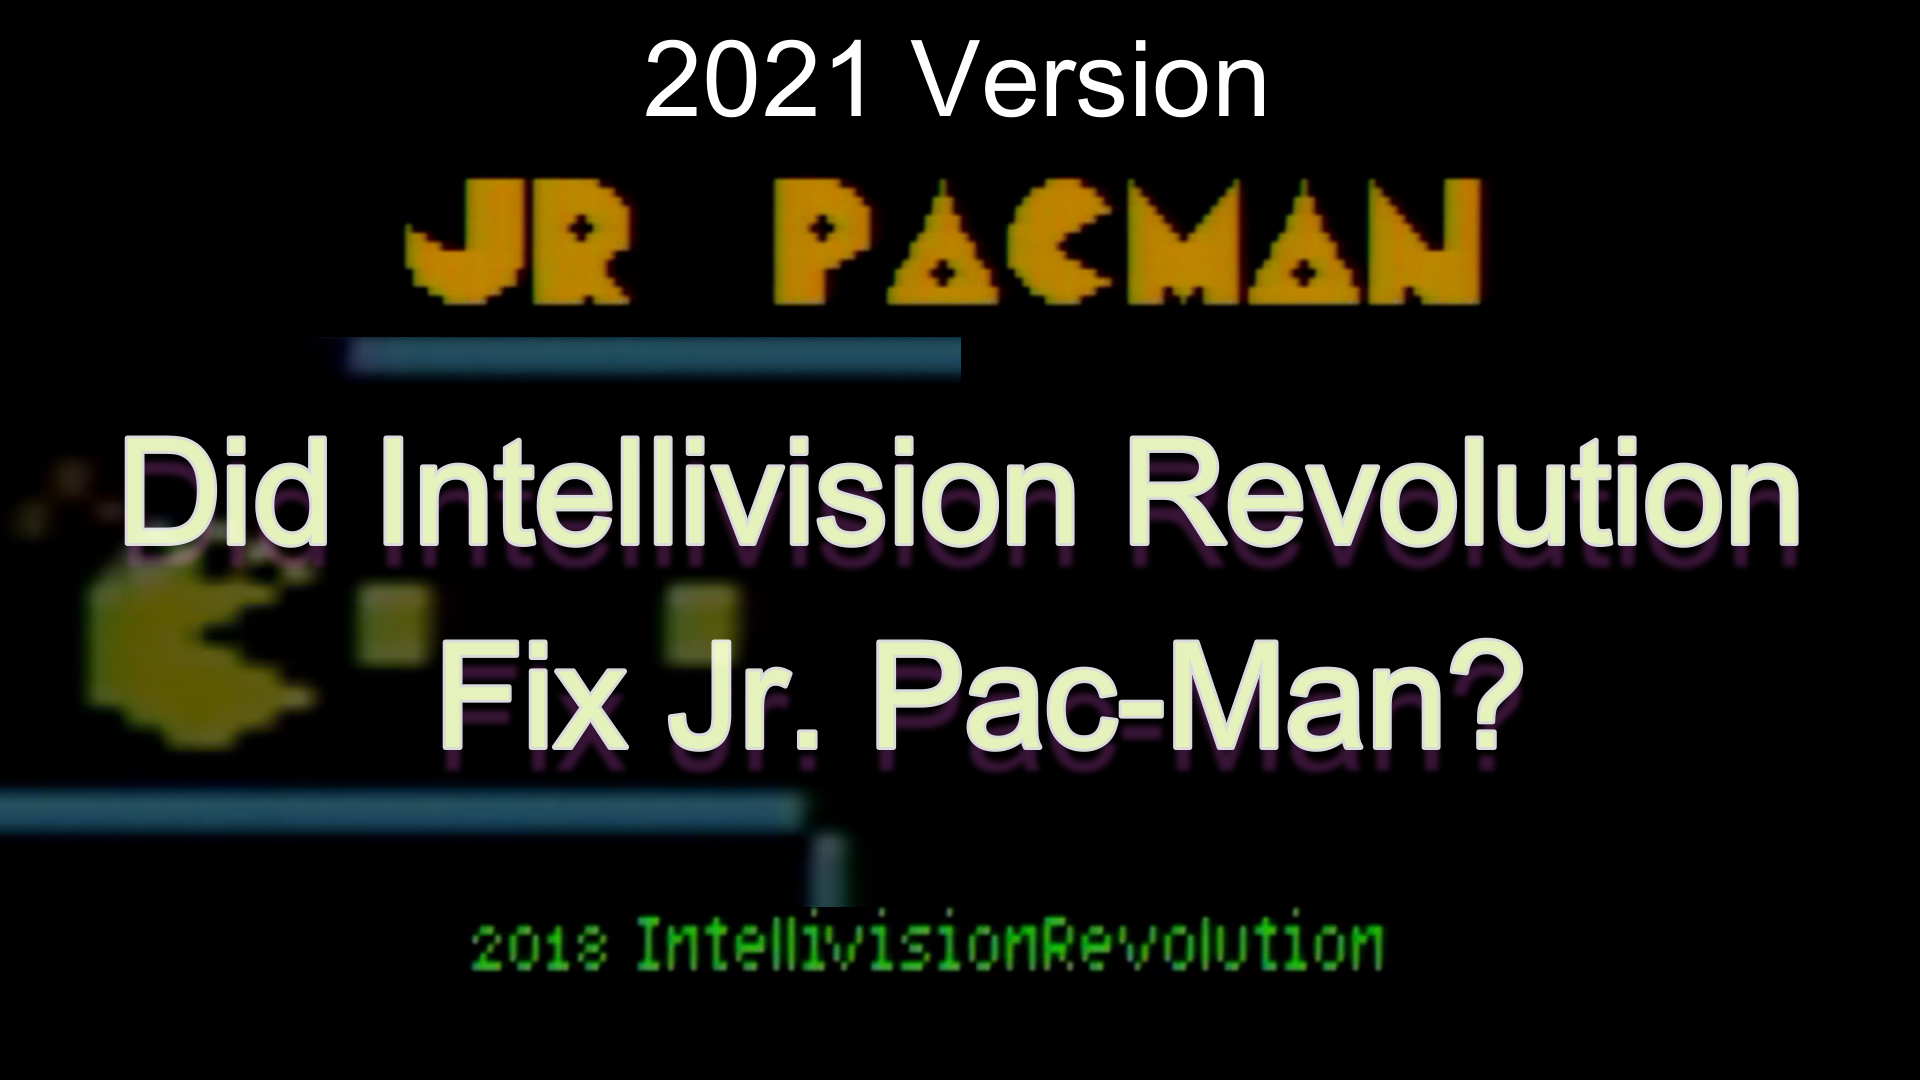 Intellivision Jr. Pac-Man Fixed Version 2021